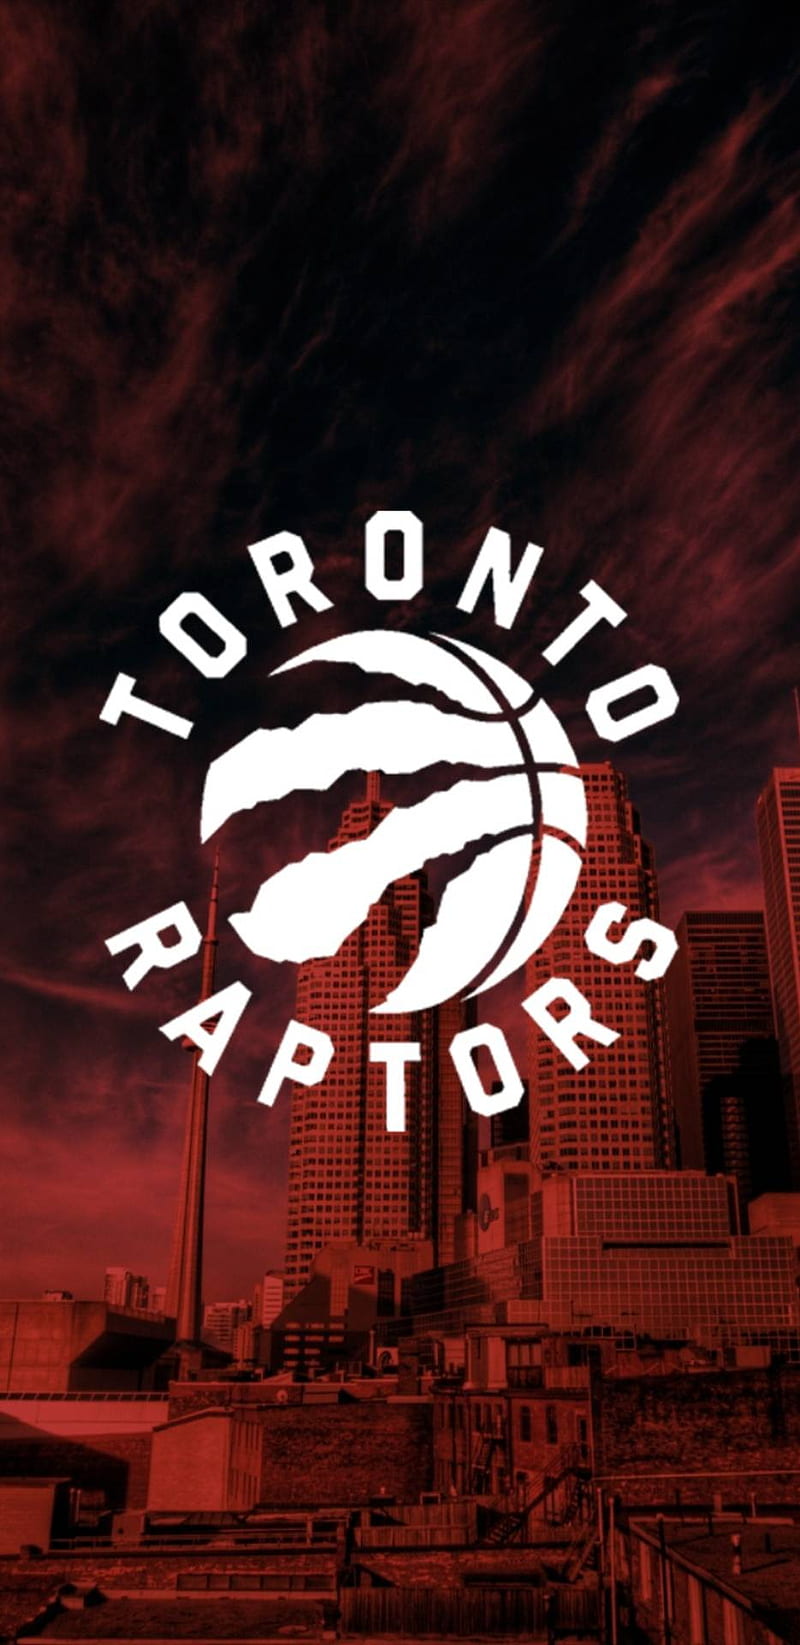 Toronto Raptors HD Wallpaper